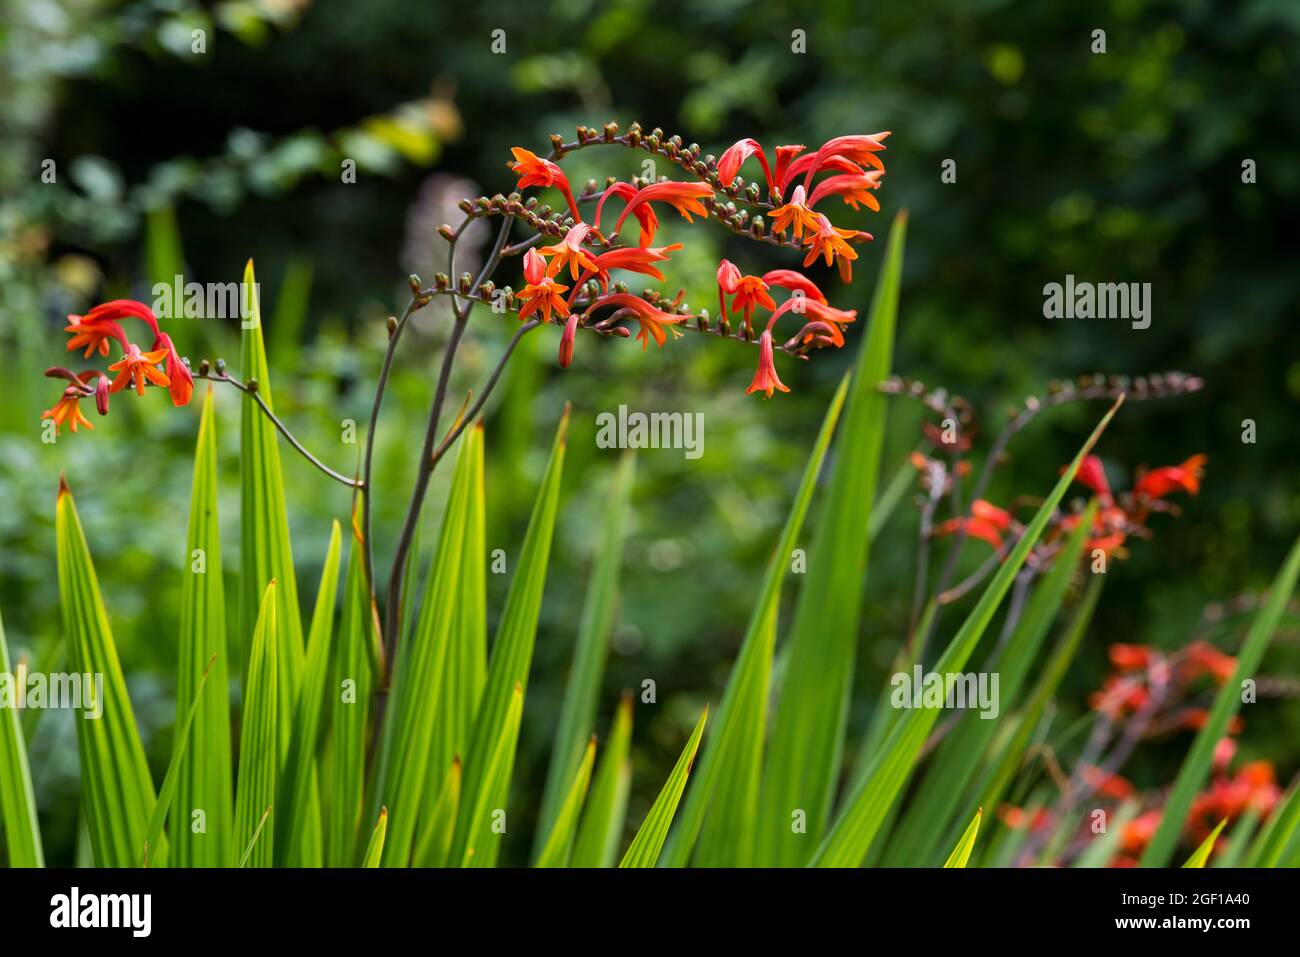 Crocosmia, AKA Montbretia, flowering plants, iris family, Iridaceae. Arched, trumpet shaped, orange red flowers with lush sword-like green leaves. Stock Photo